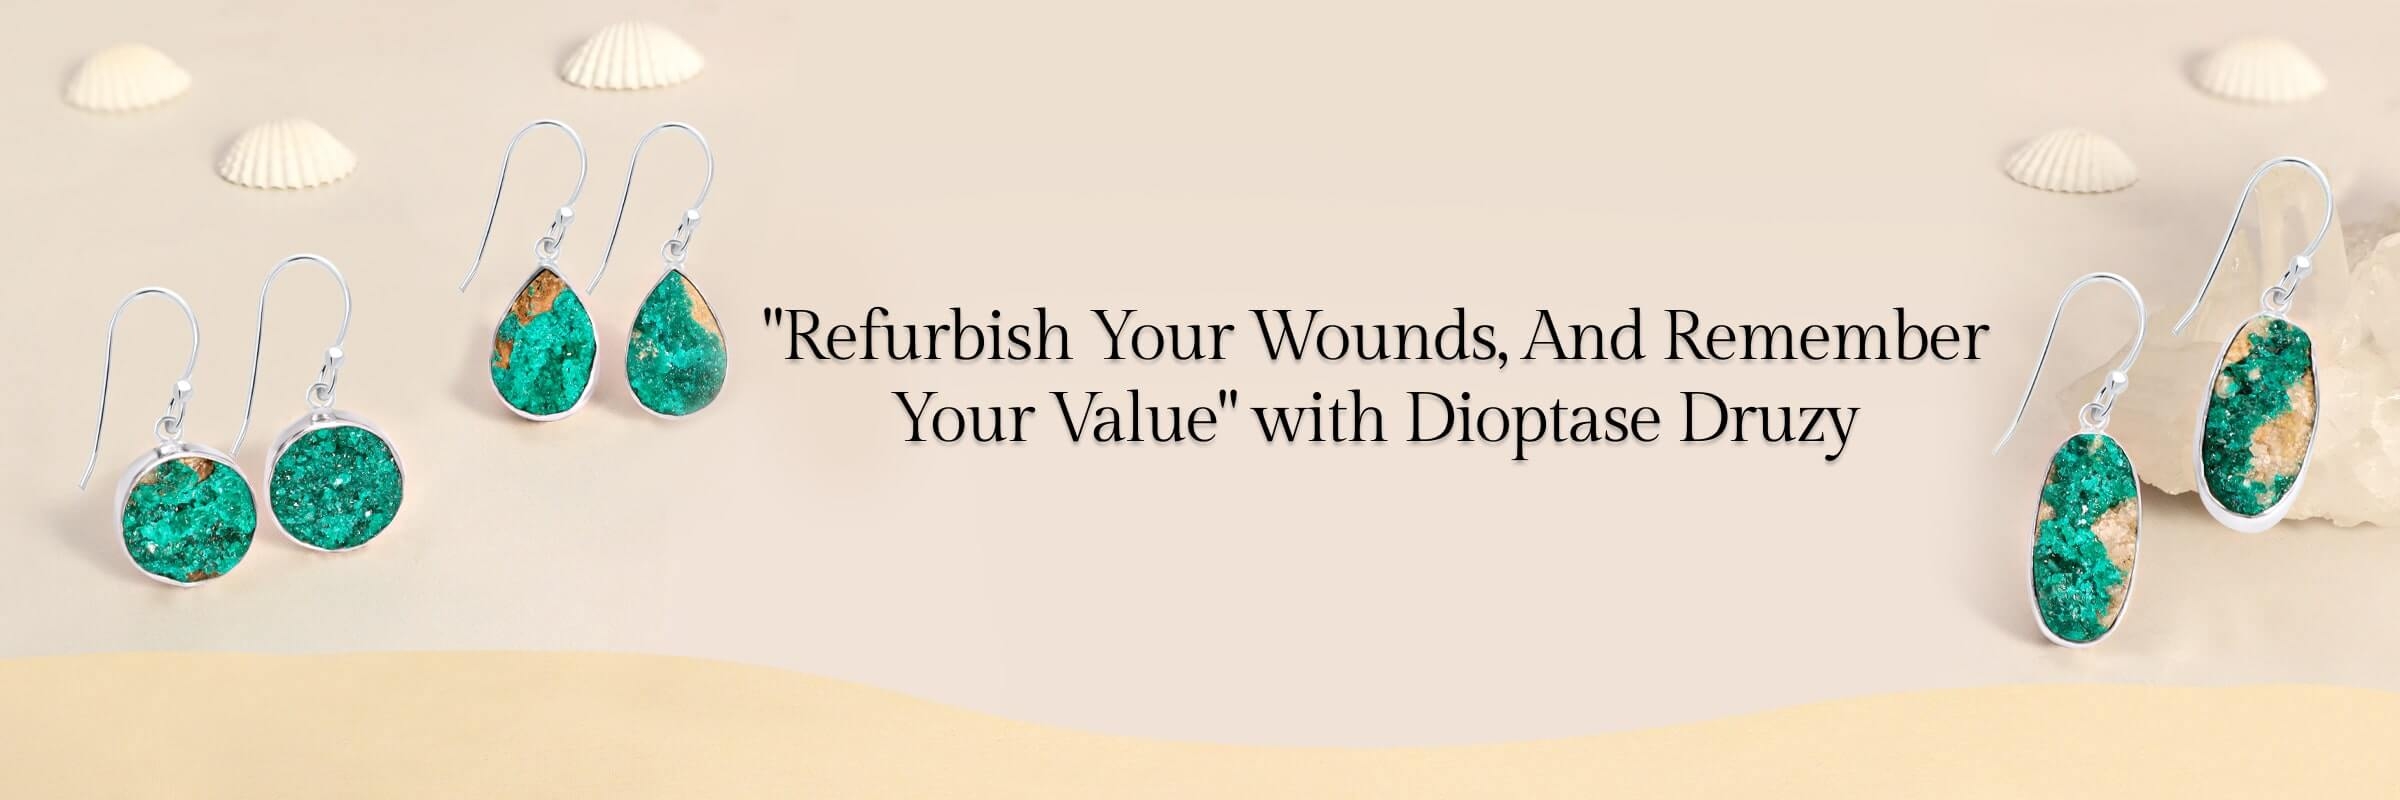 Dioptase Druzy Emotional Healing Properties